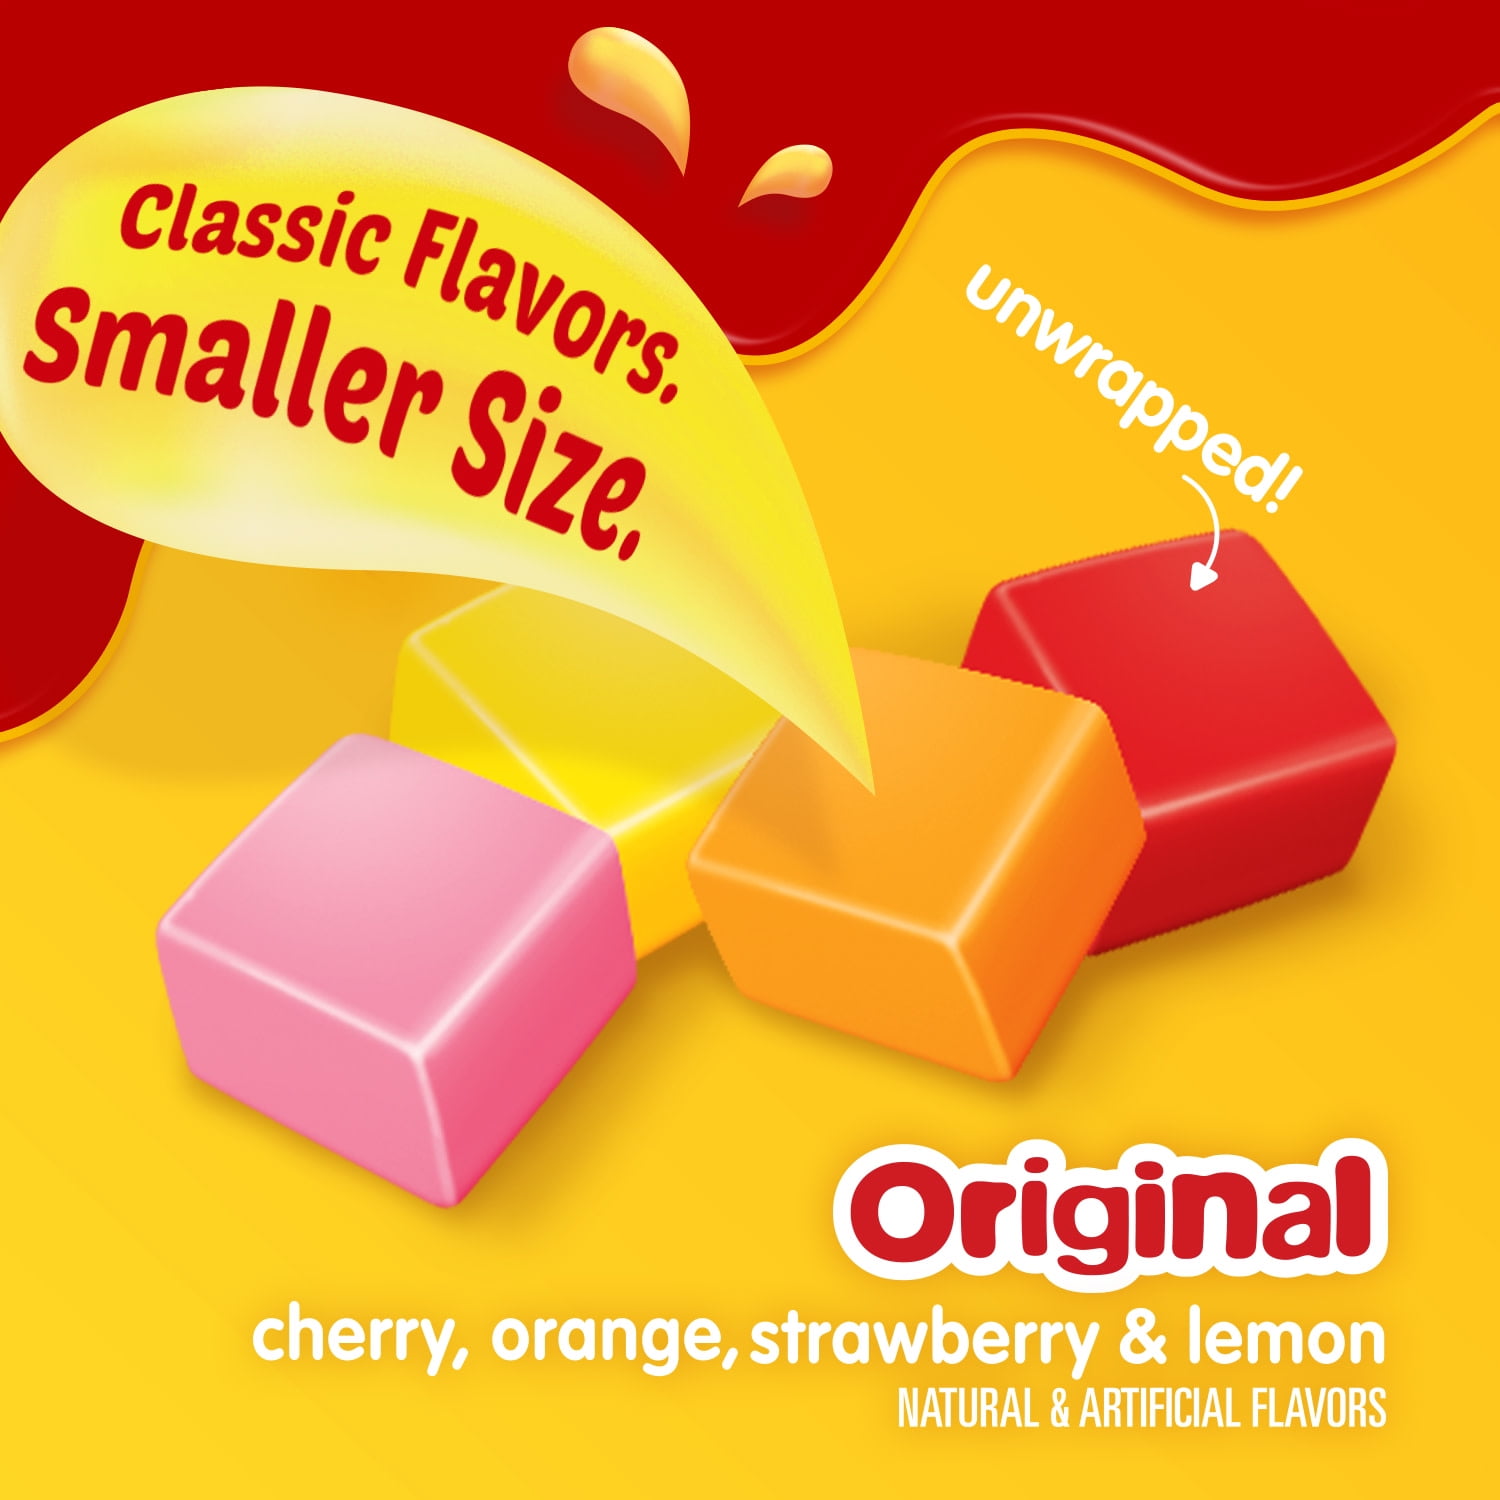 Buy Starburst Original Minis Fruit Chews Gummy Candy Grab N Go 8 Oz